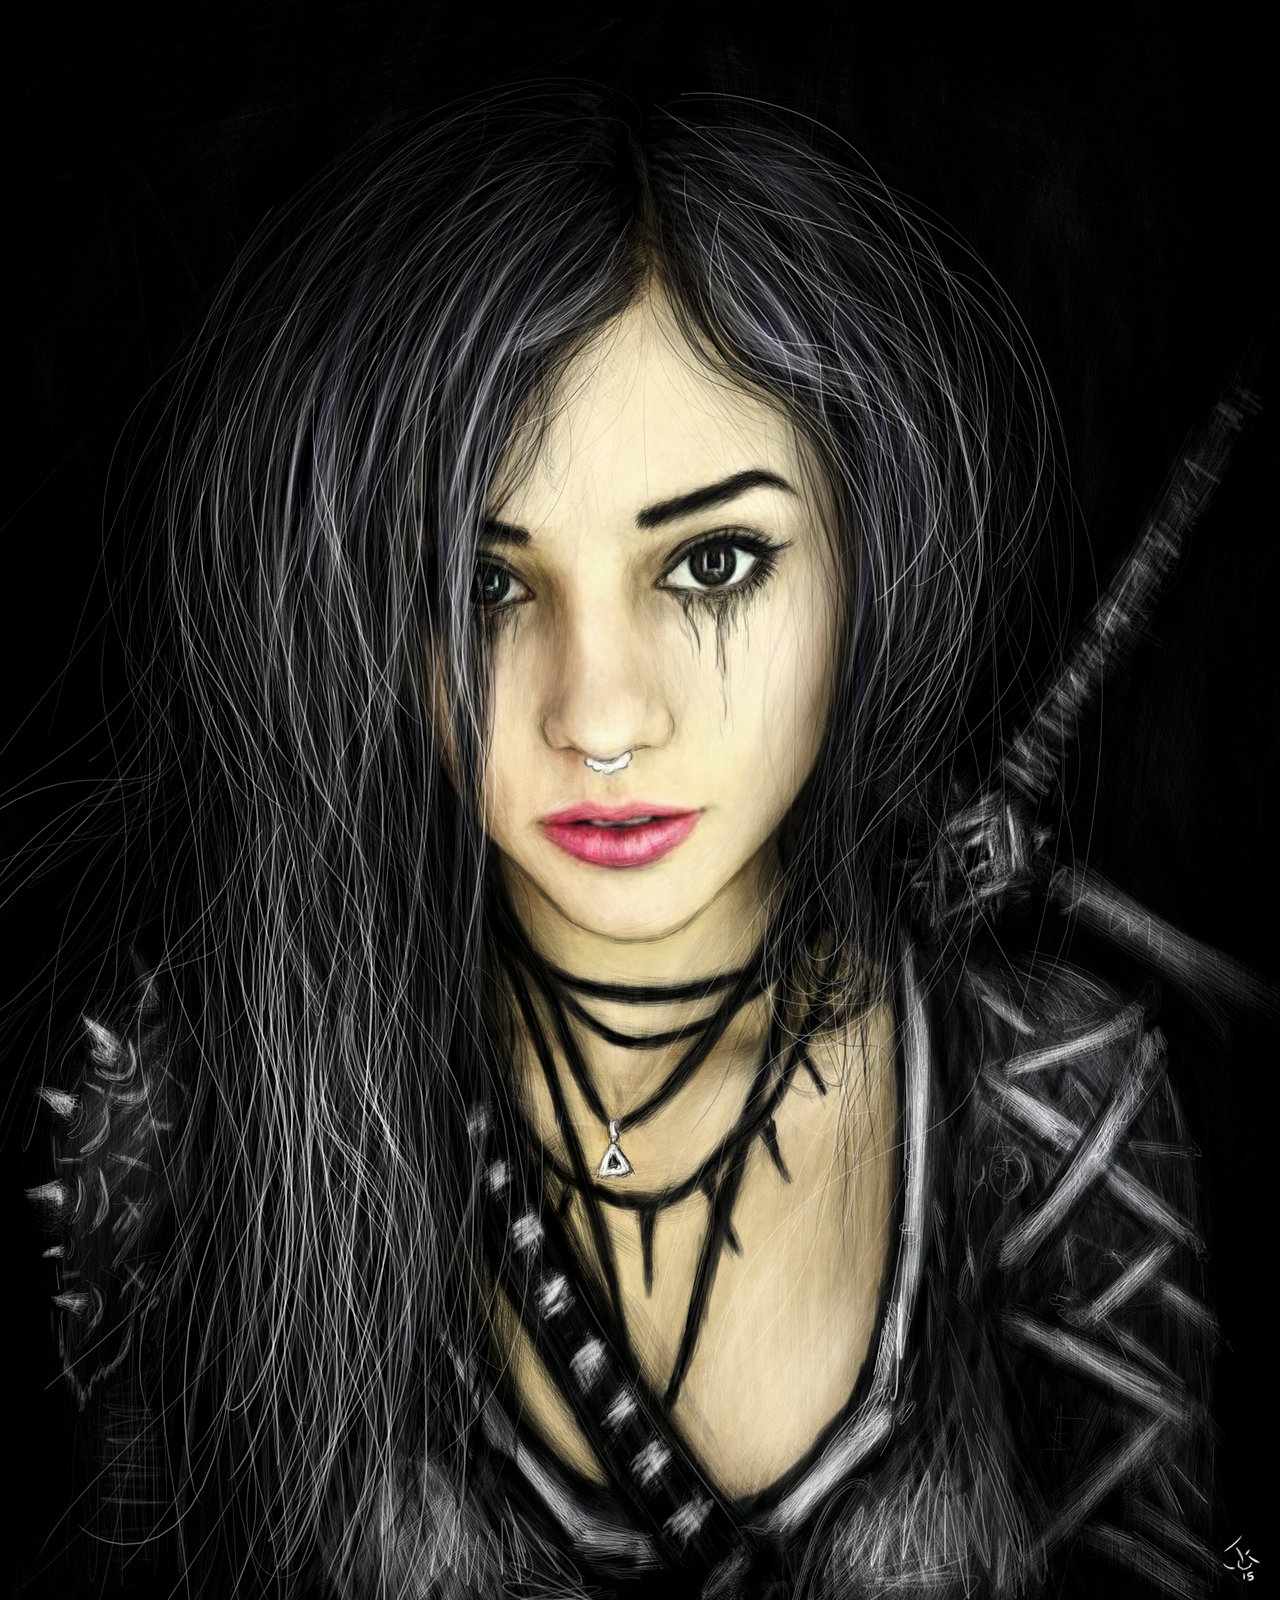 Girl in Black by JustinGedak on DeviantArt